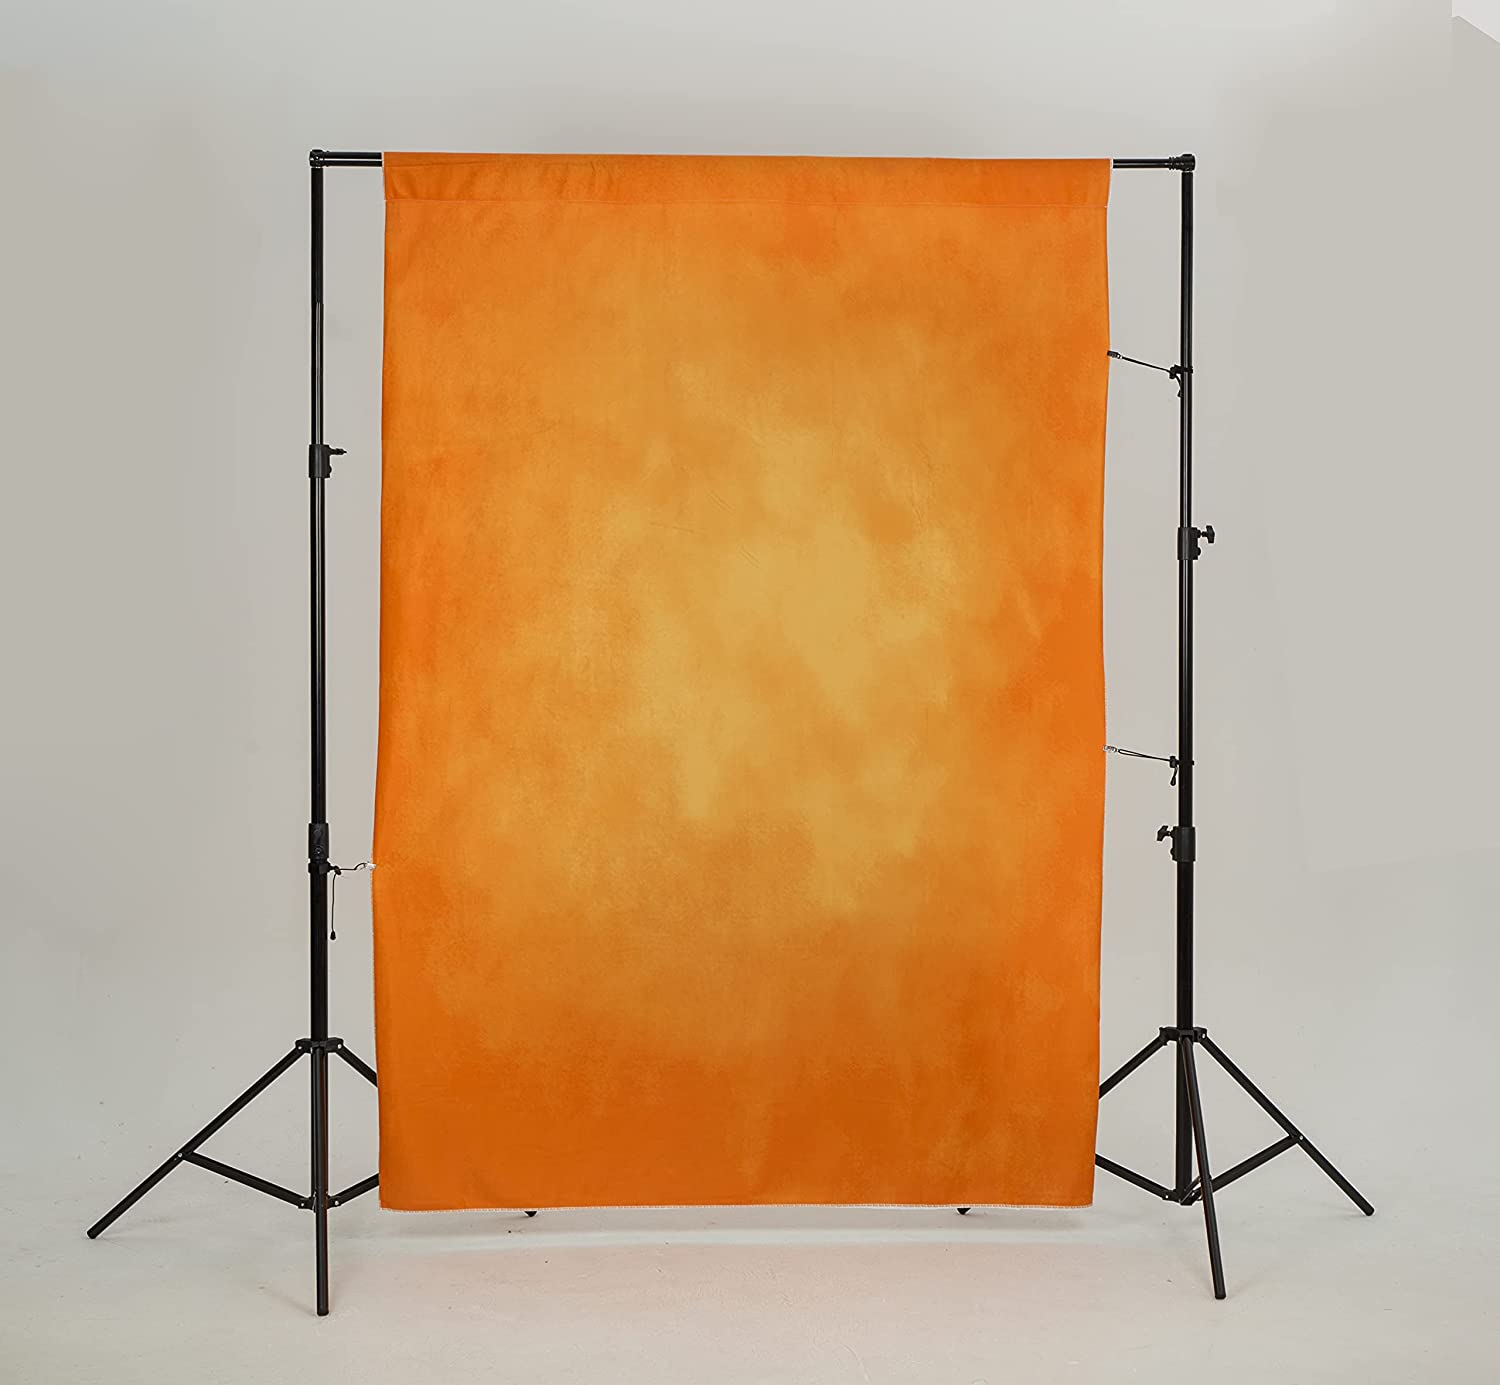 Kate オレンジ色のグラデーションテクスチャ抽象的な背景布